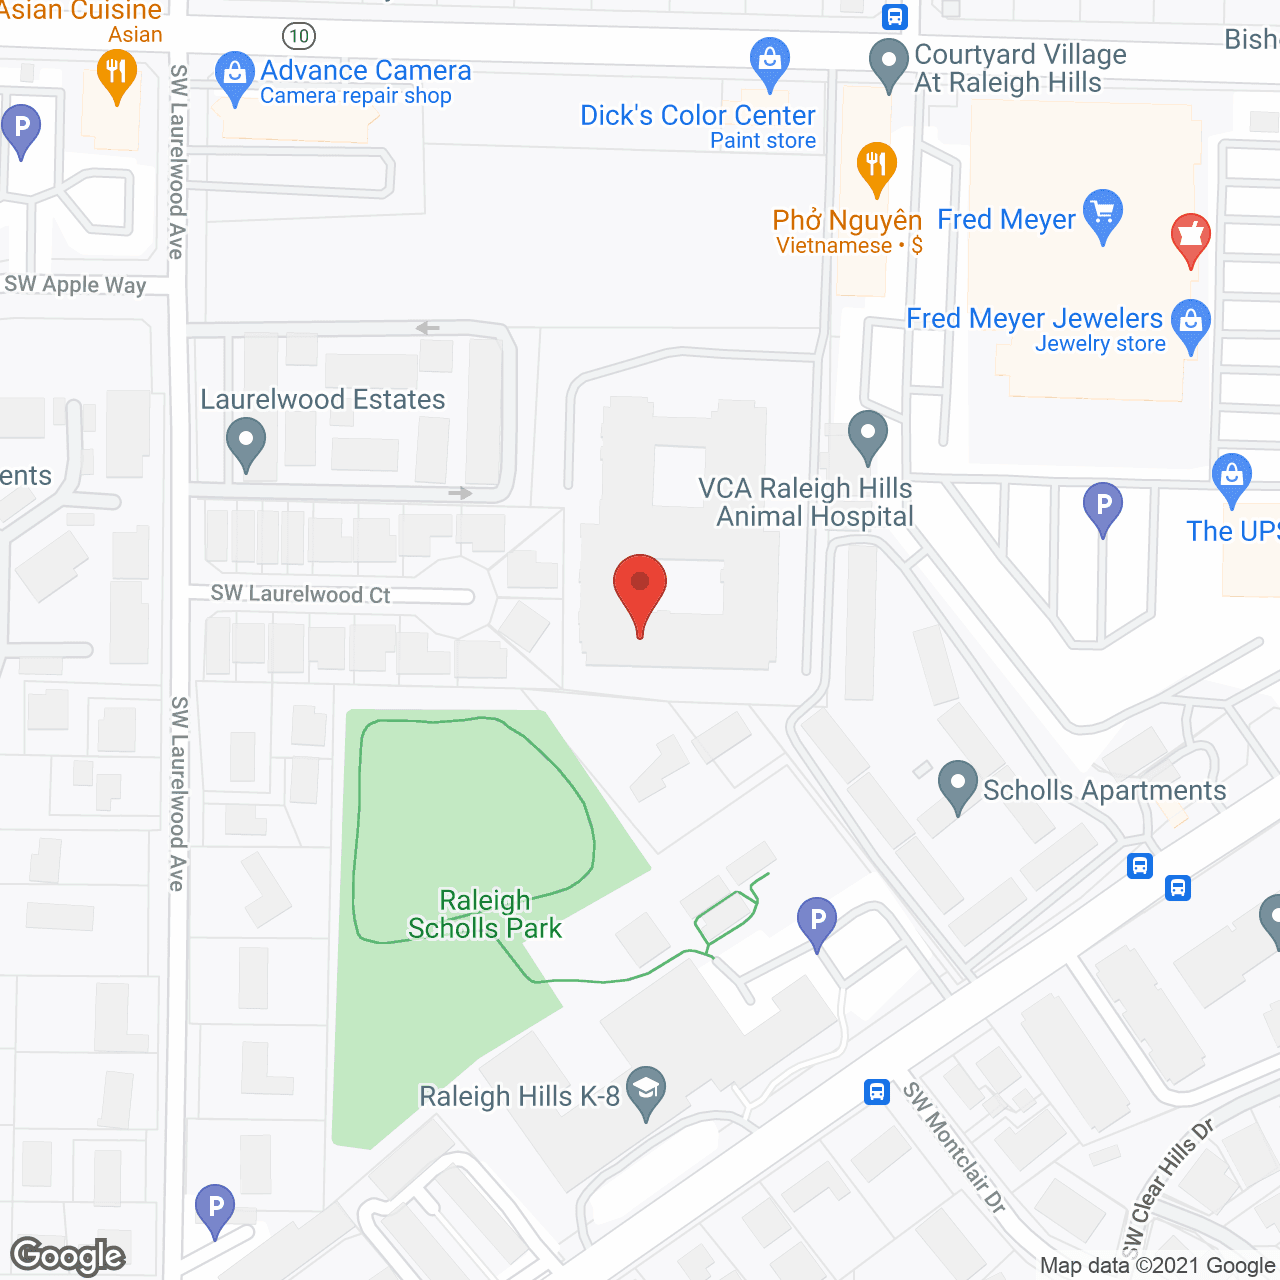 Courtyard Village at Raleigh Hills in google map